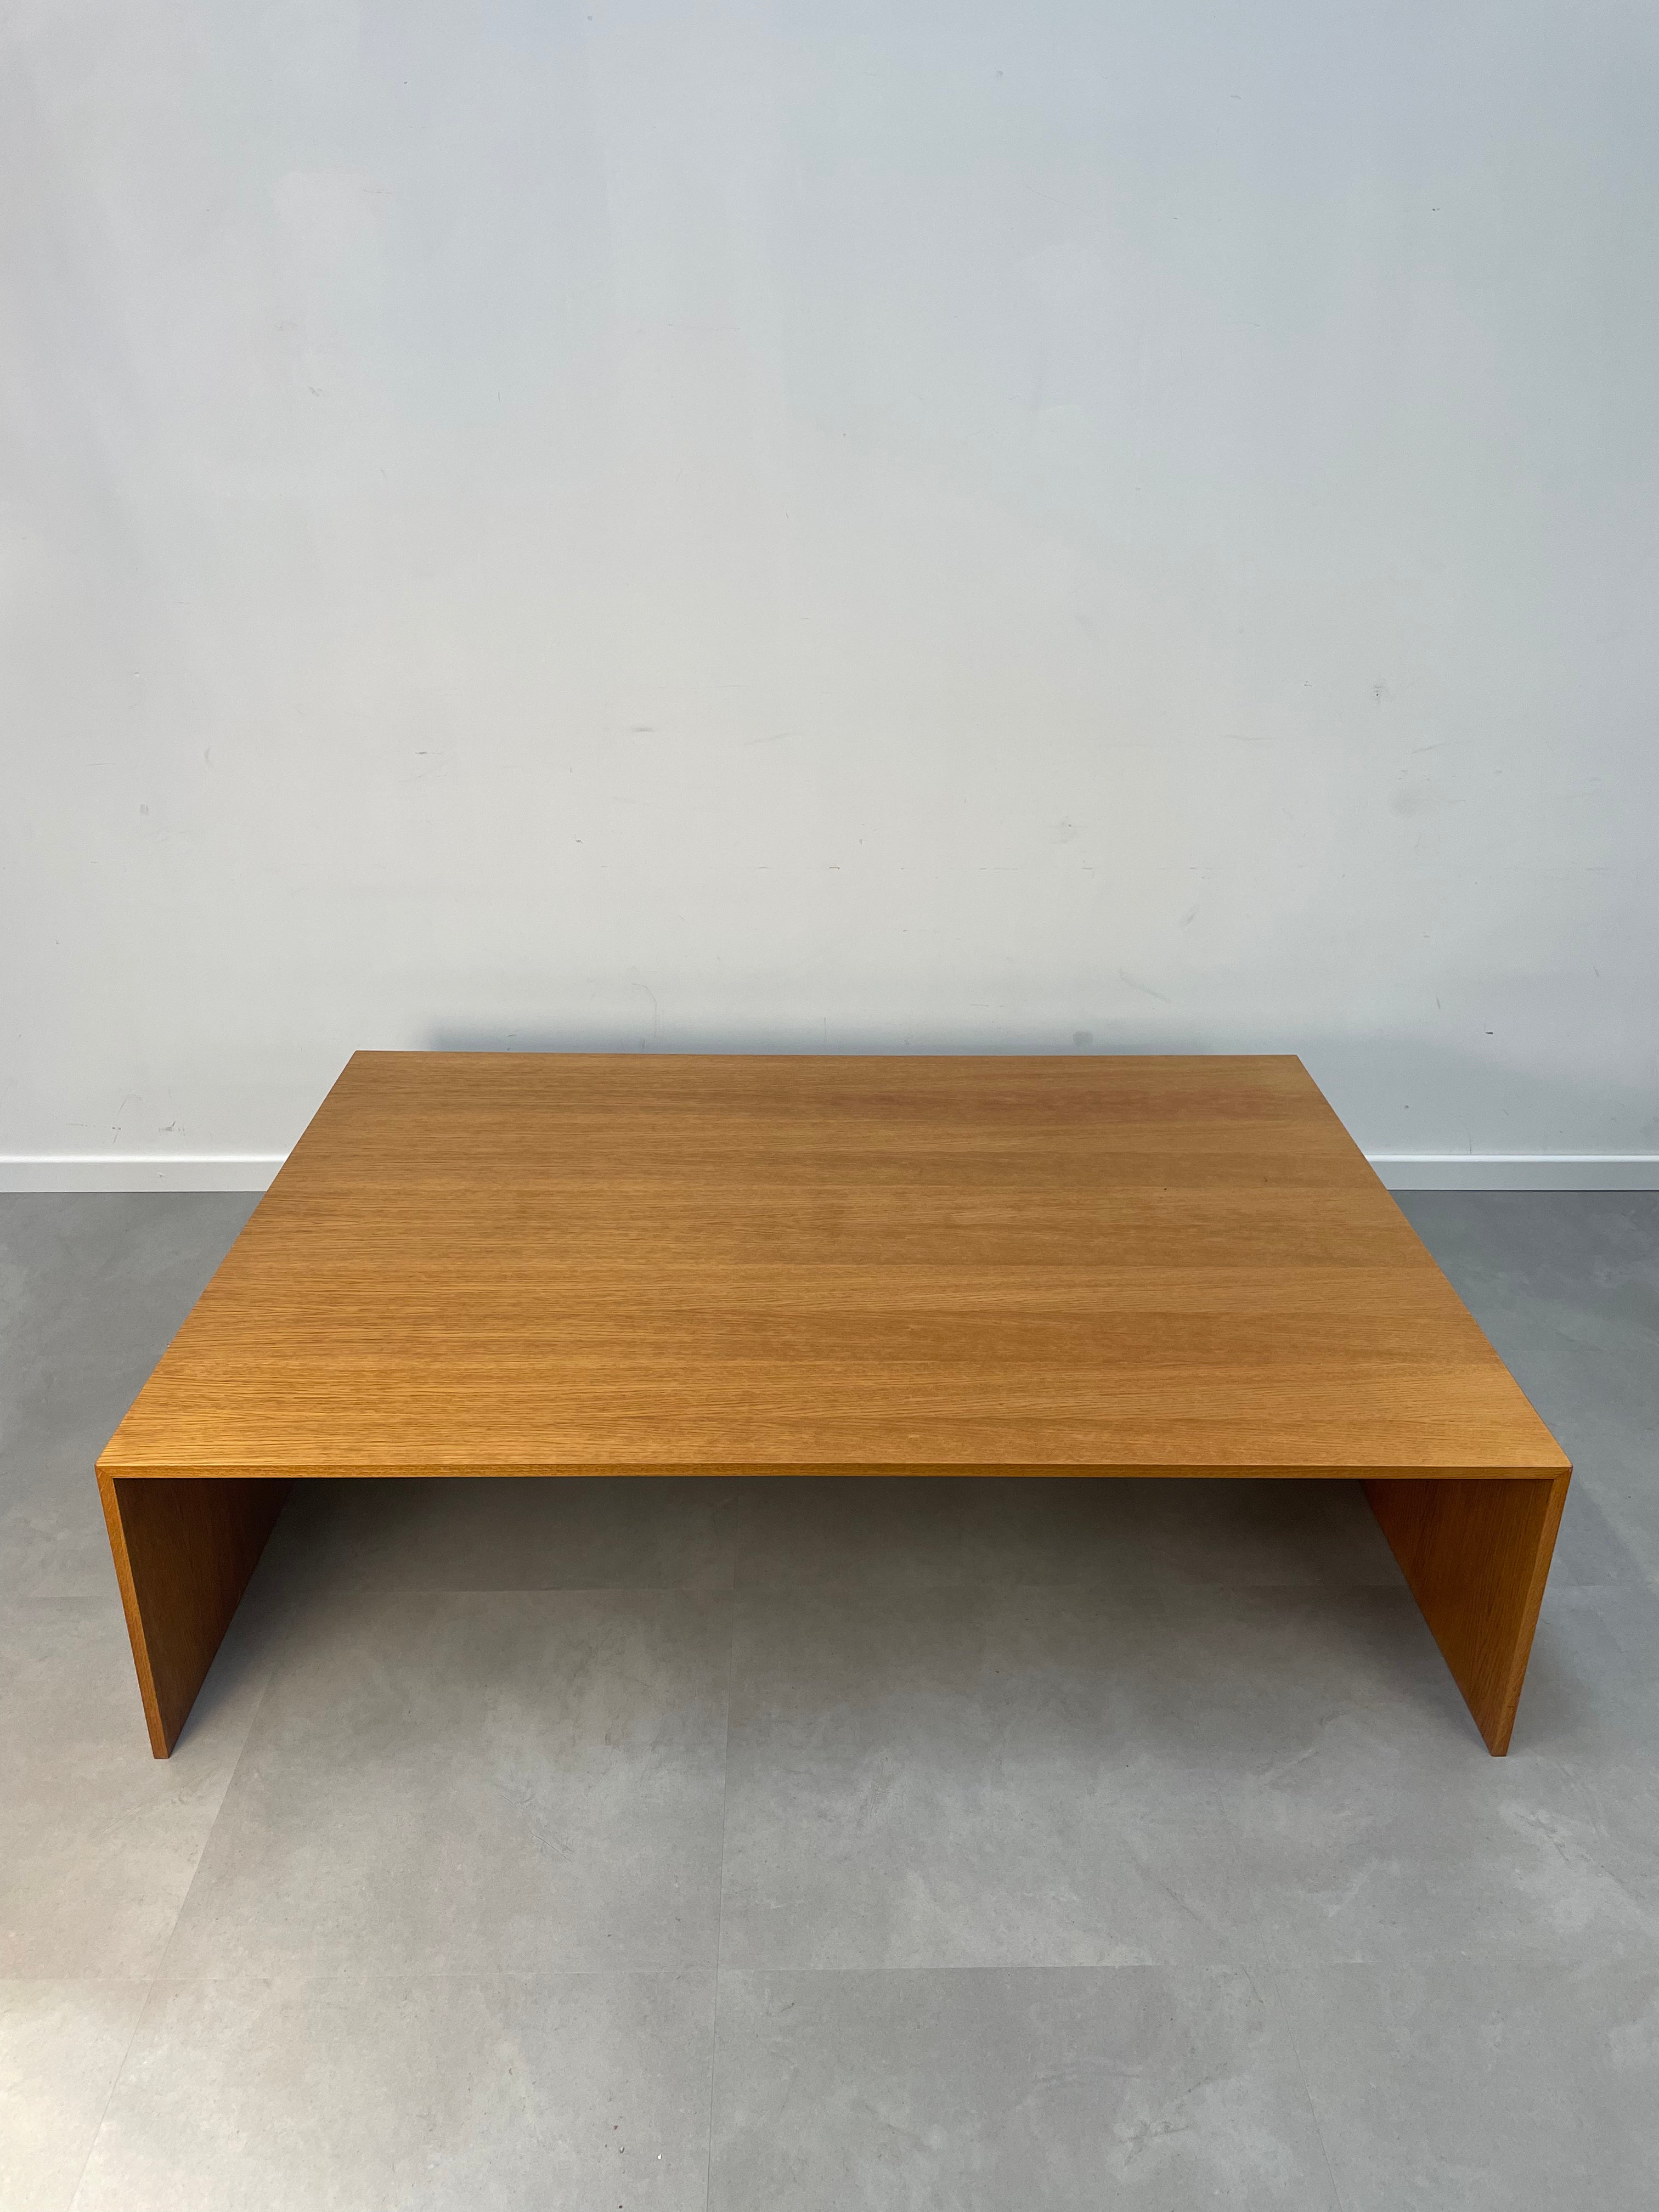 XL oak coffee table 120 x 170 cm